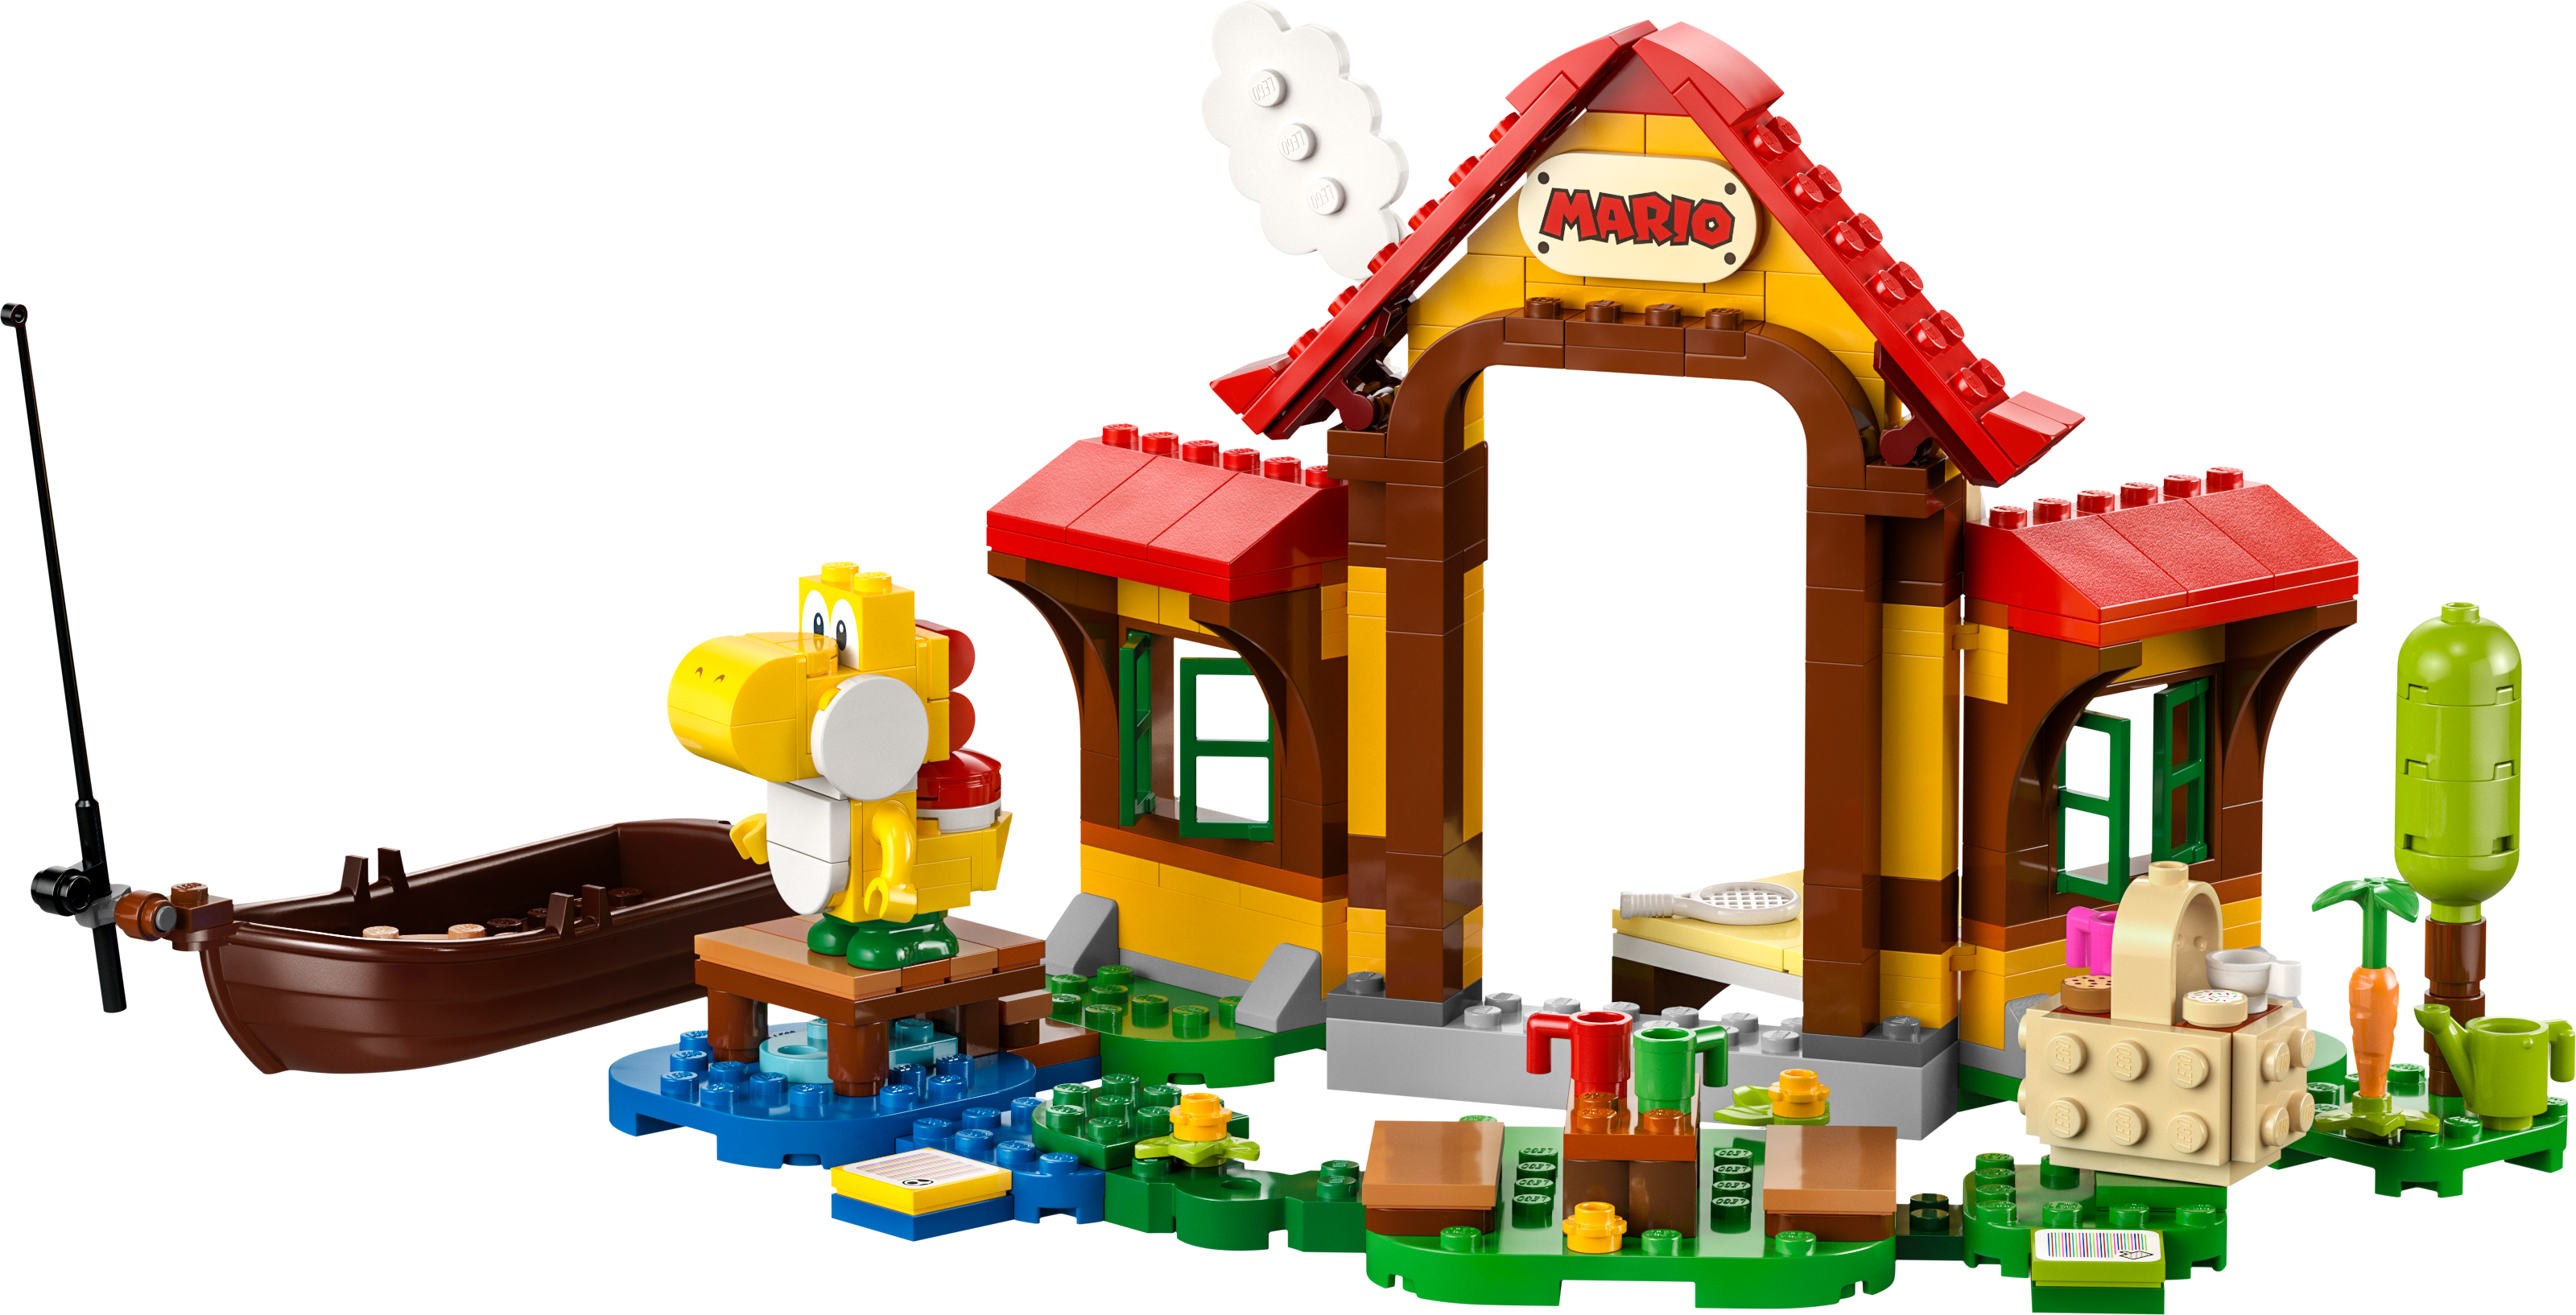 Set Lego: ora con Super Mario e Luigi si partecipa a una challenge